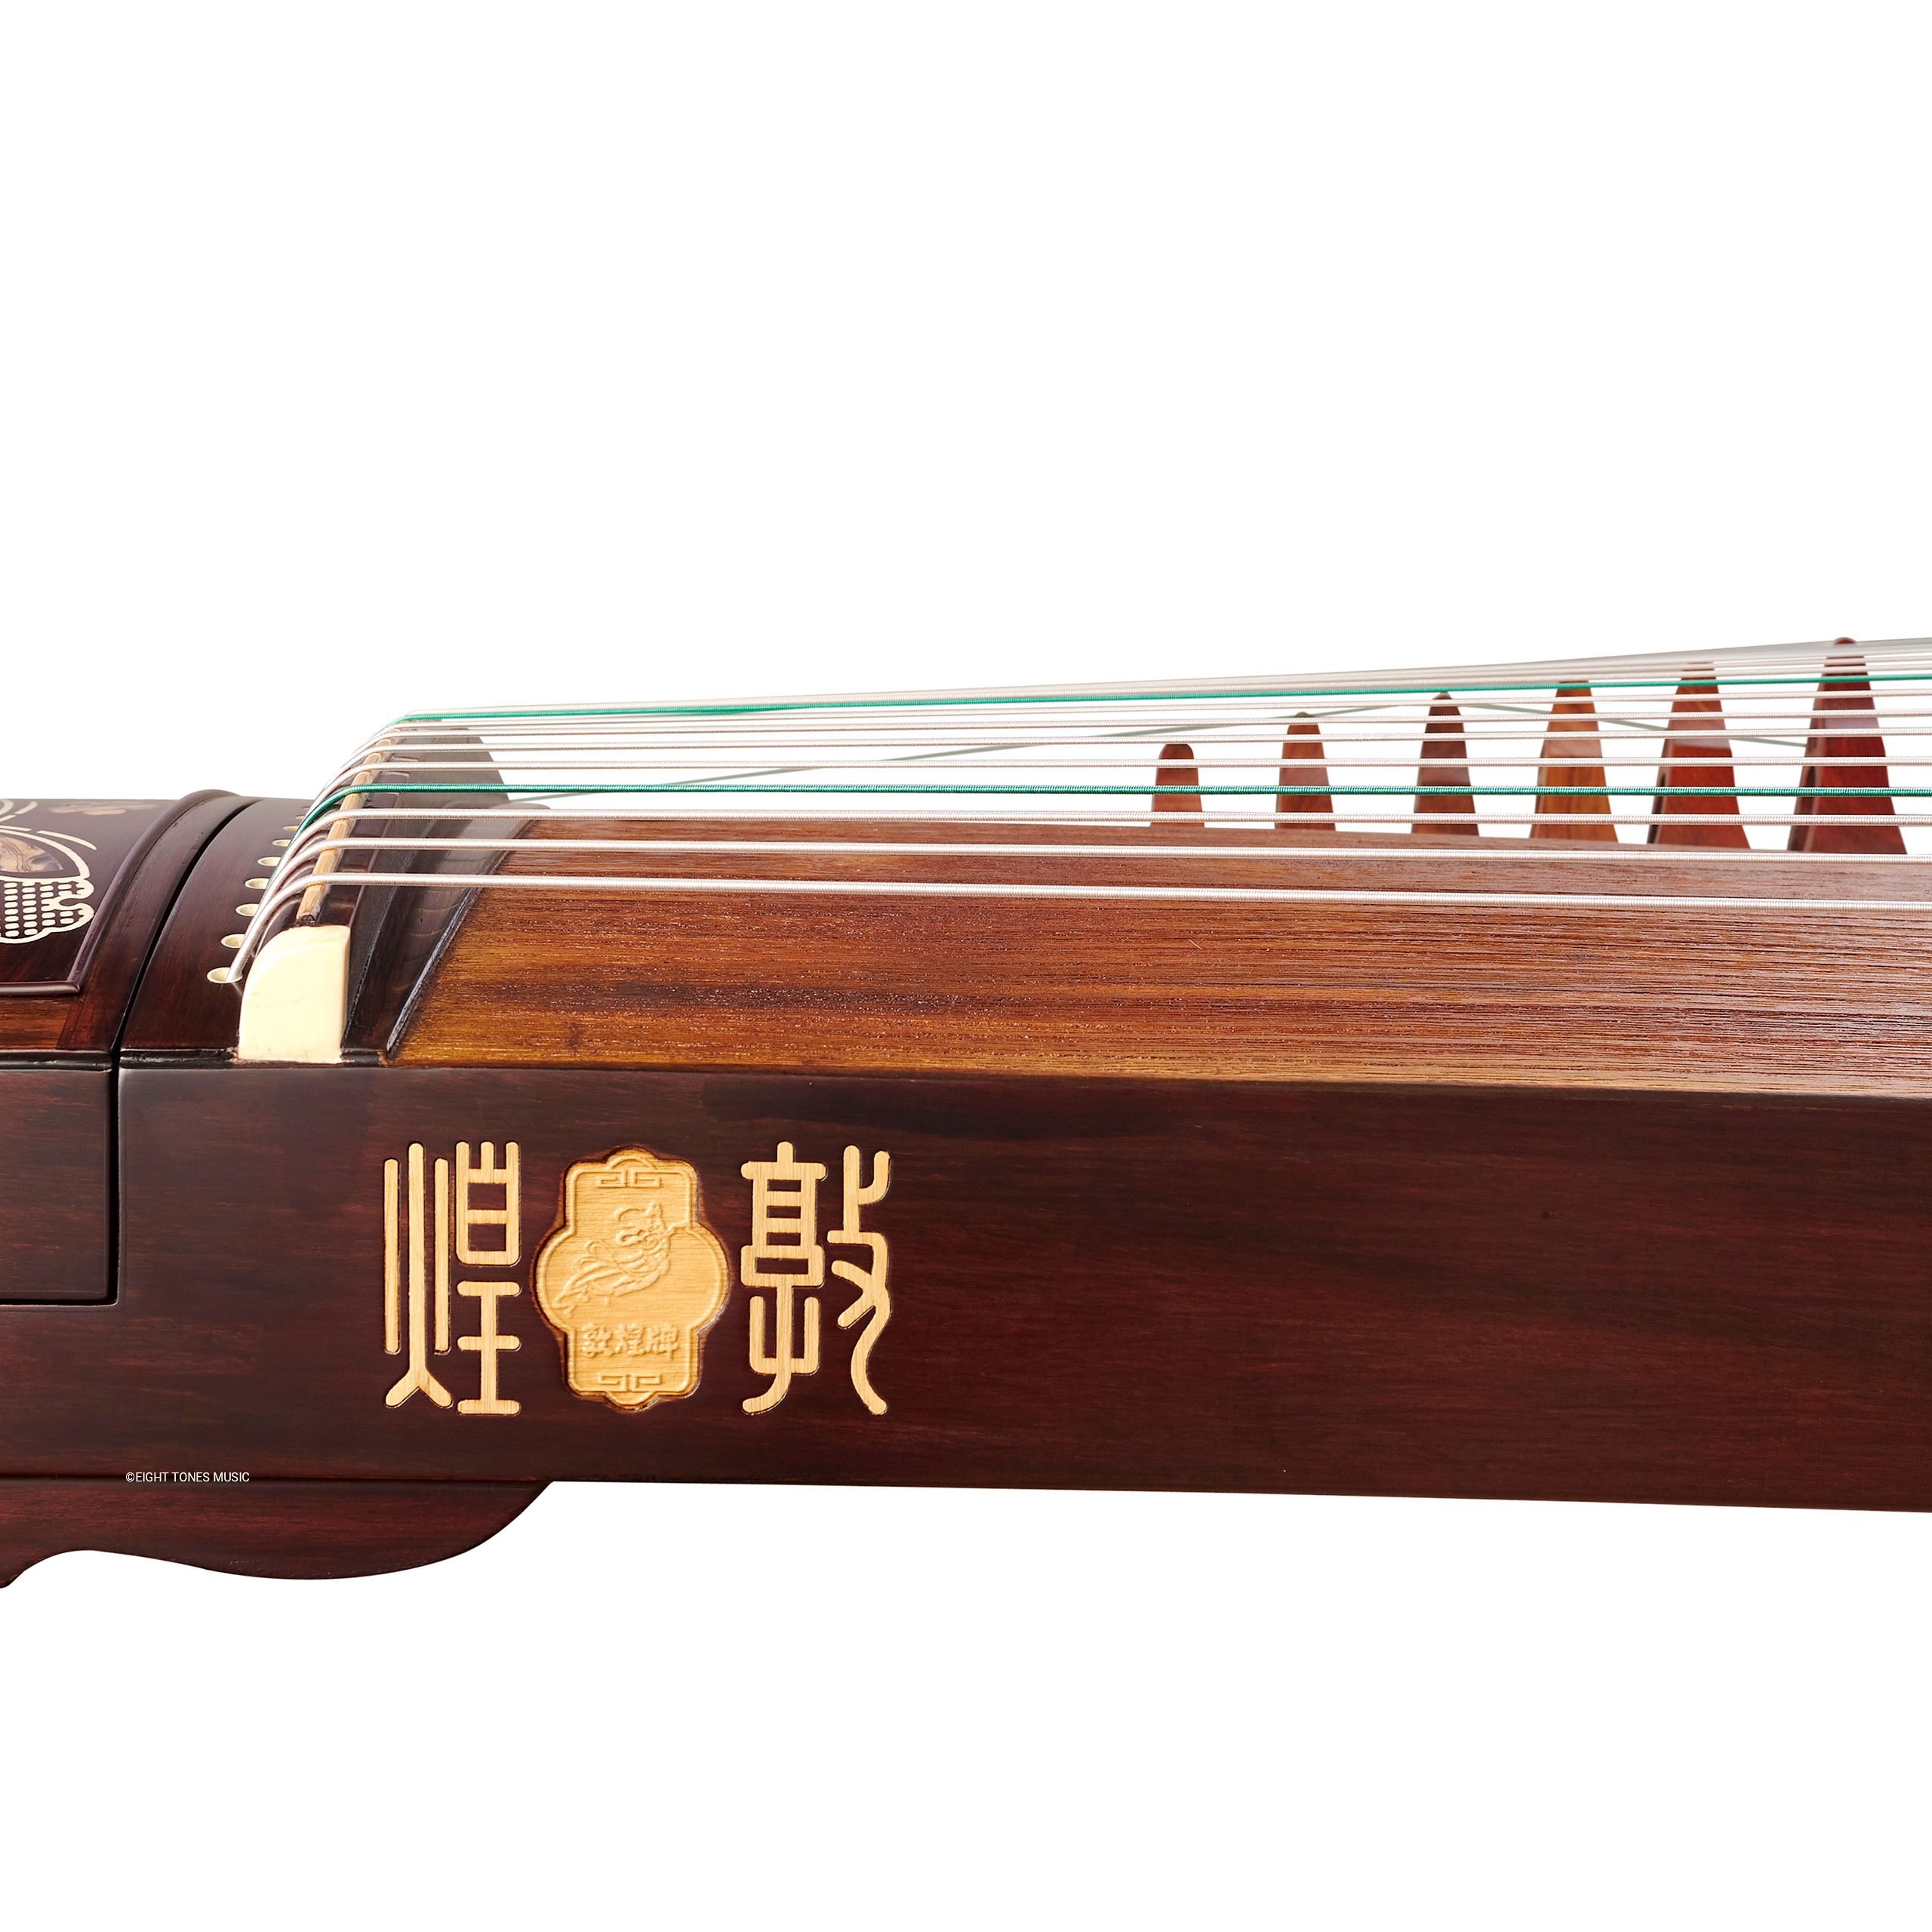 Dunhuang Yichang ‘Tale of Liang Zhu’ Yellow Sandalwood Guzheng Sideboard with brand